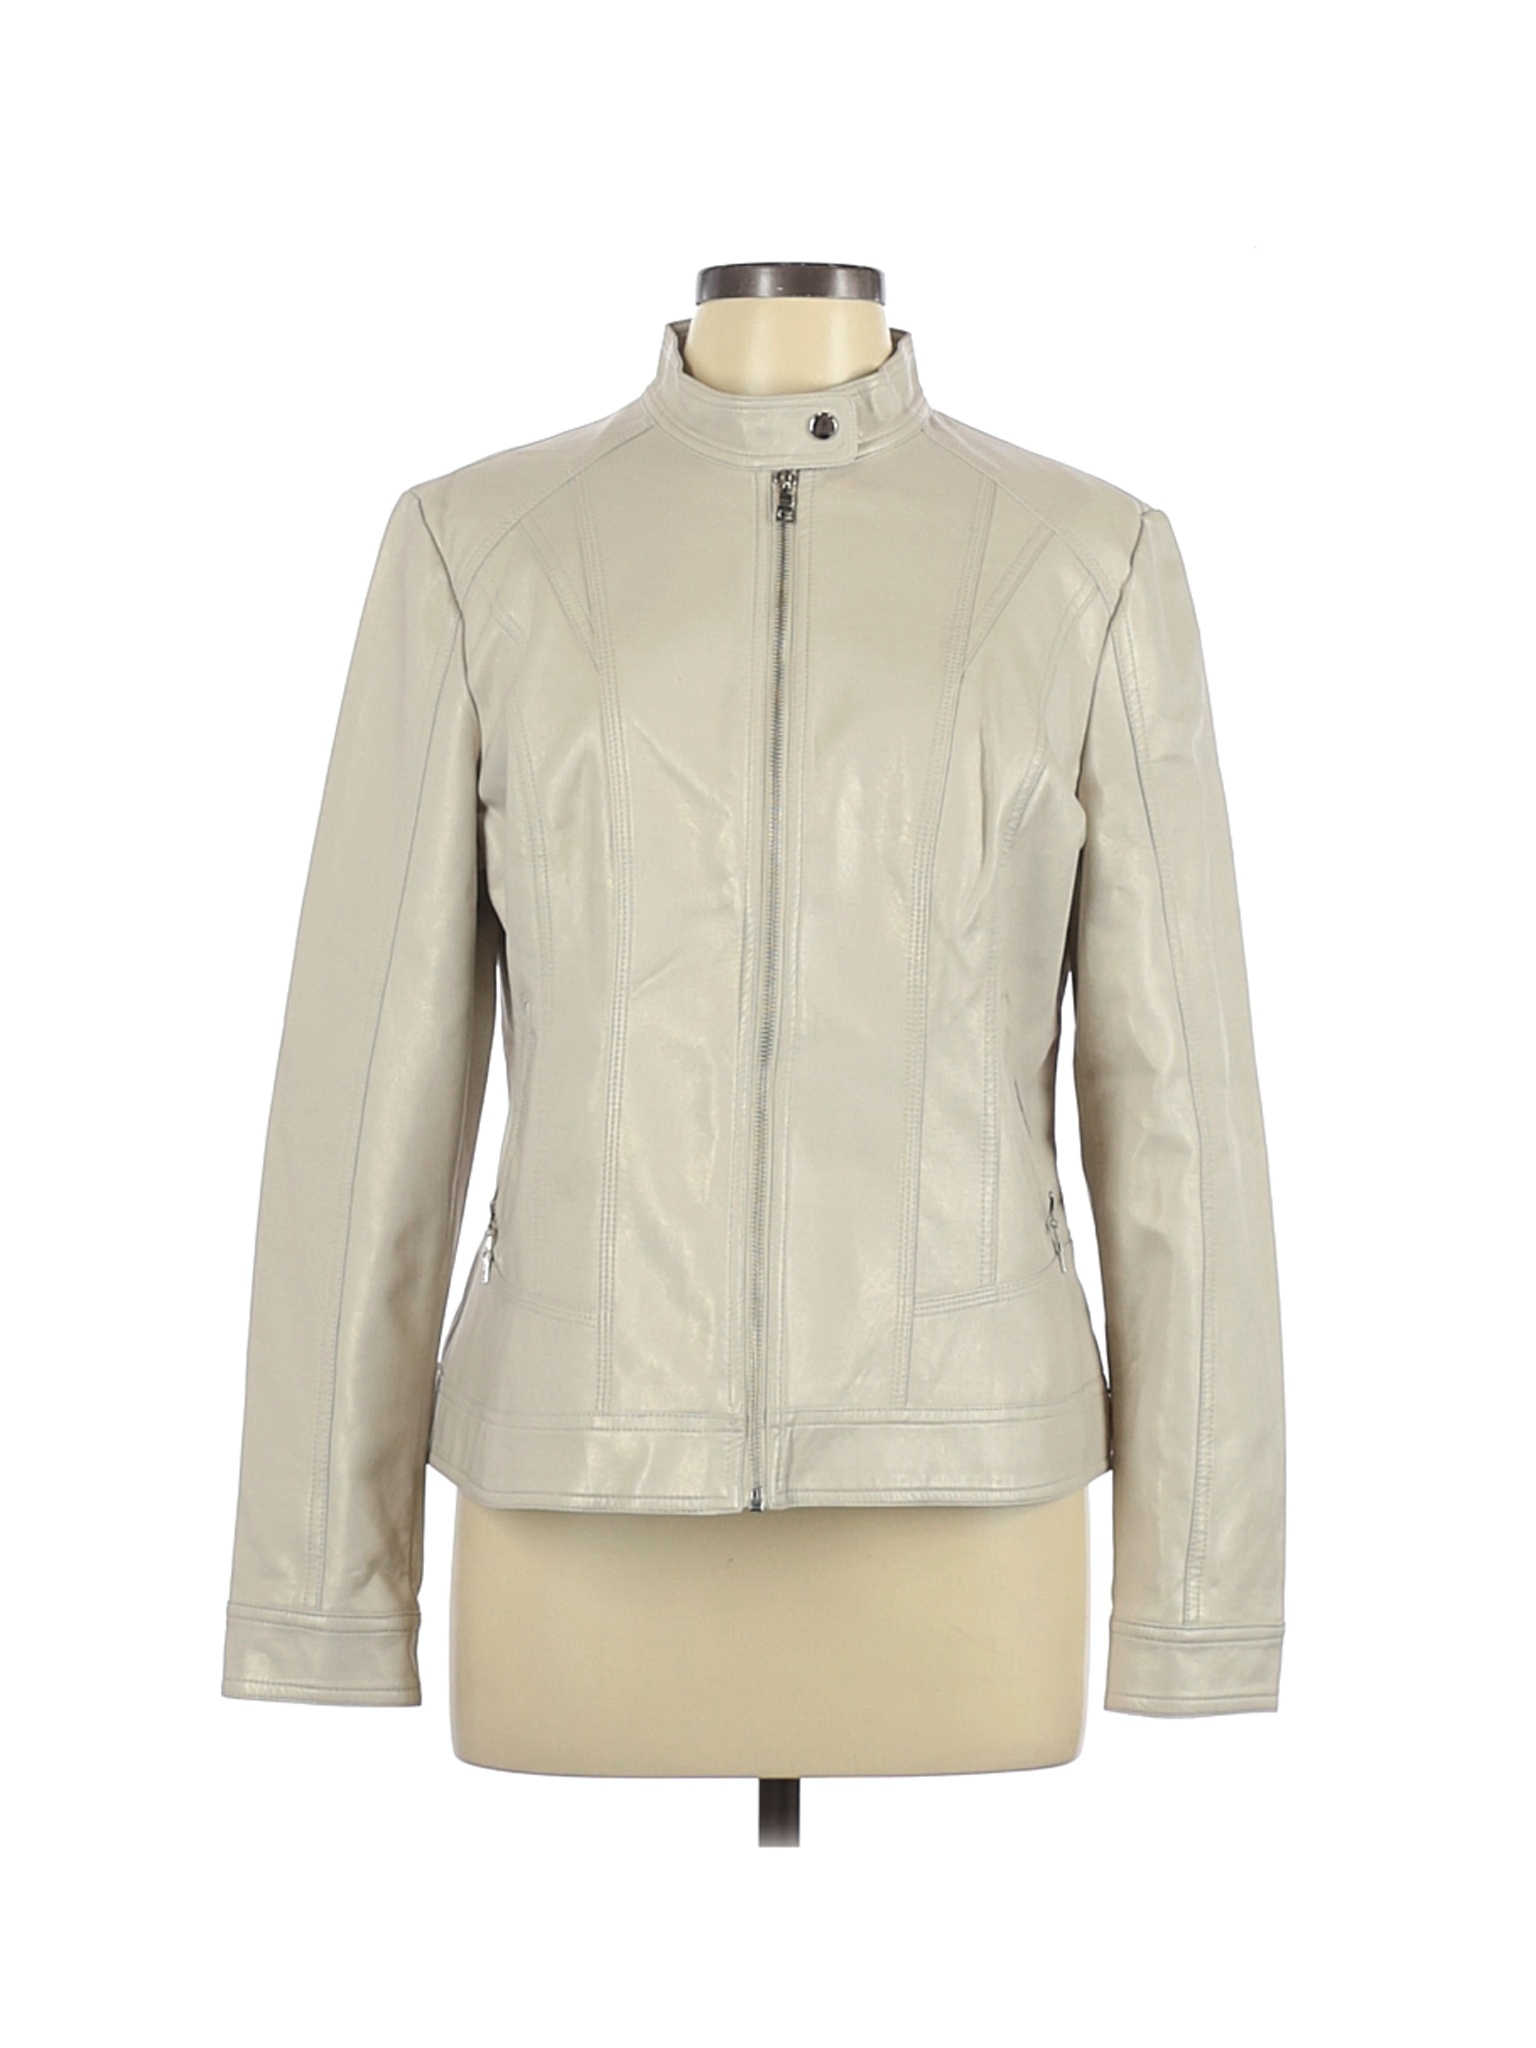 Roz & Ali Women Ivory Faux Leather Jacket L | eBay